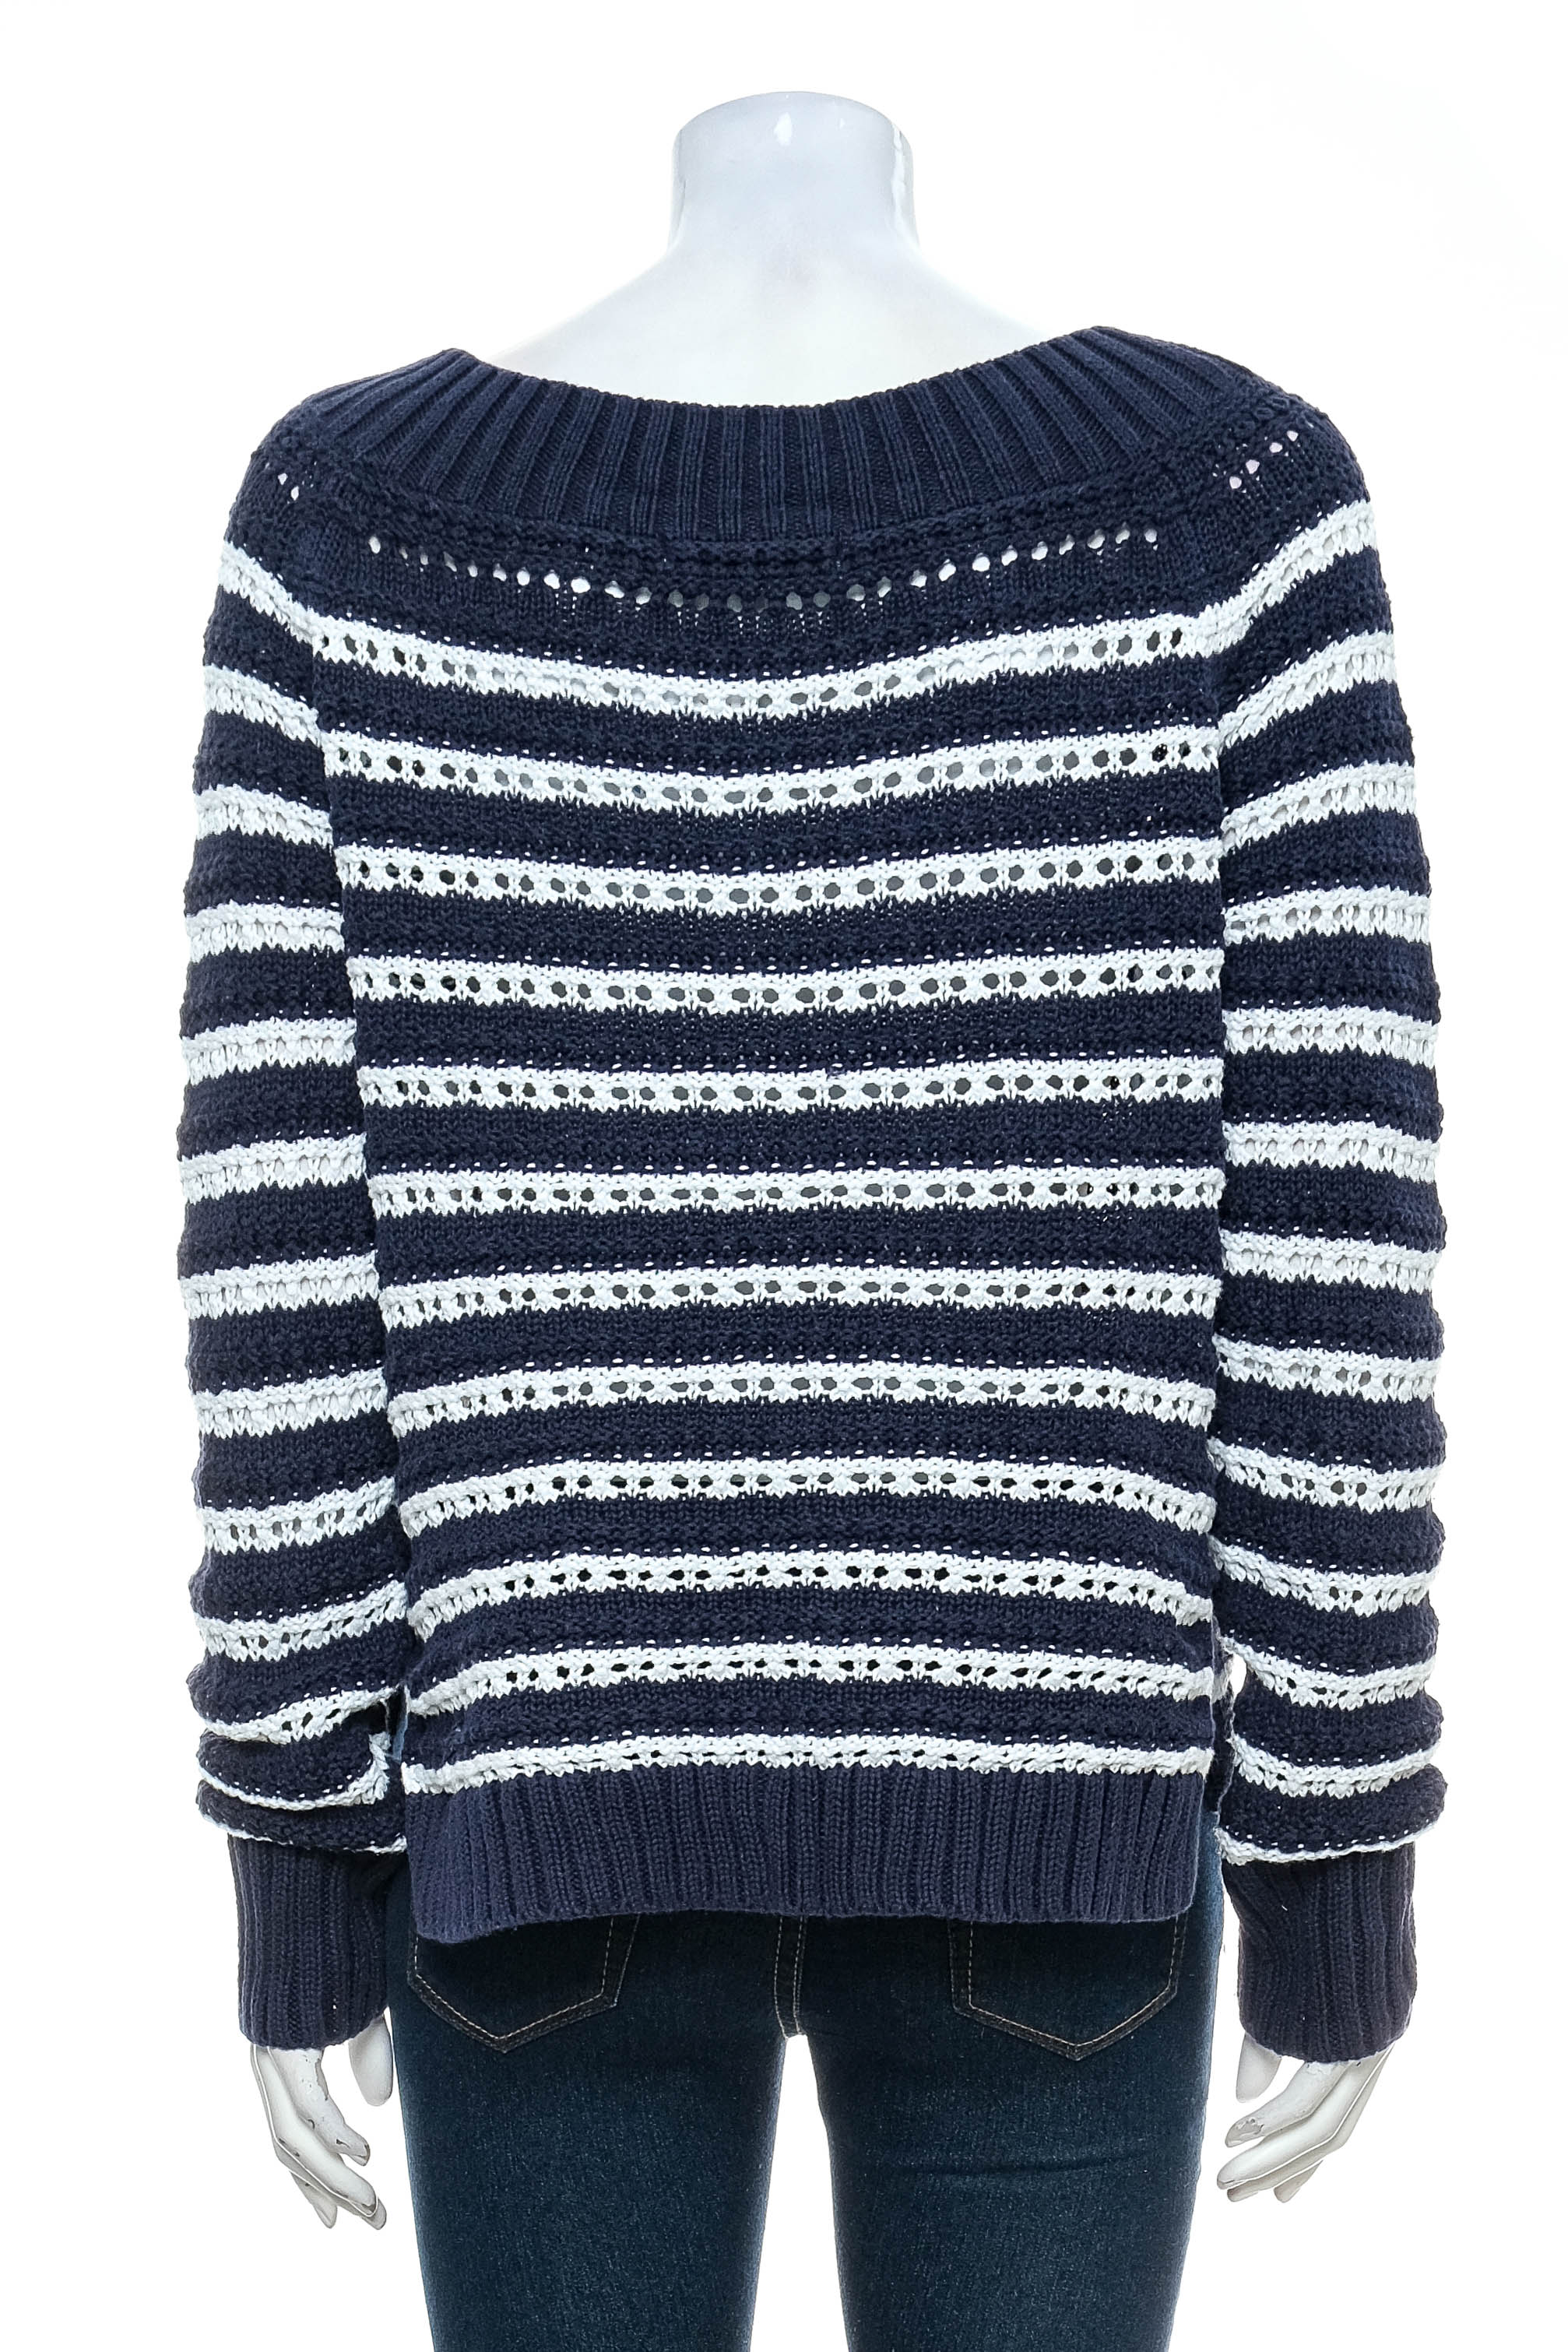 Women's sweater - Find. - 1